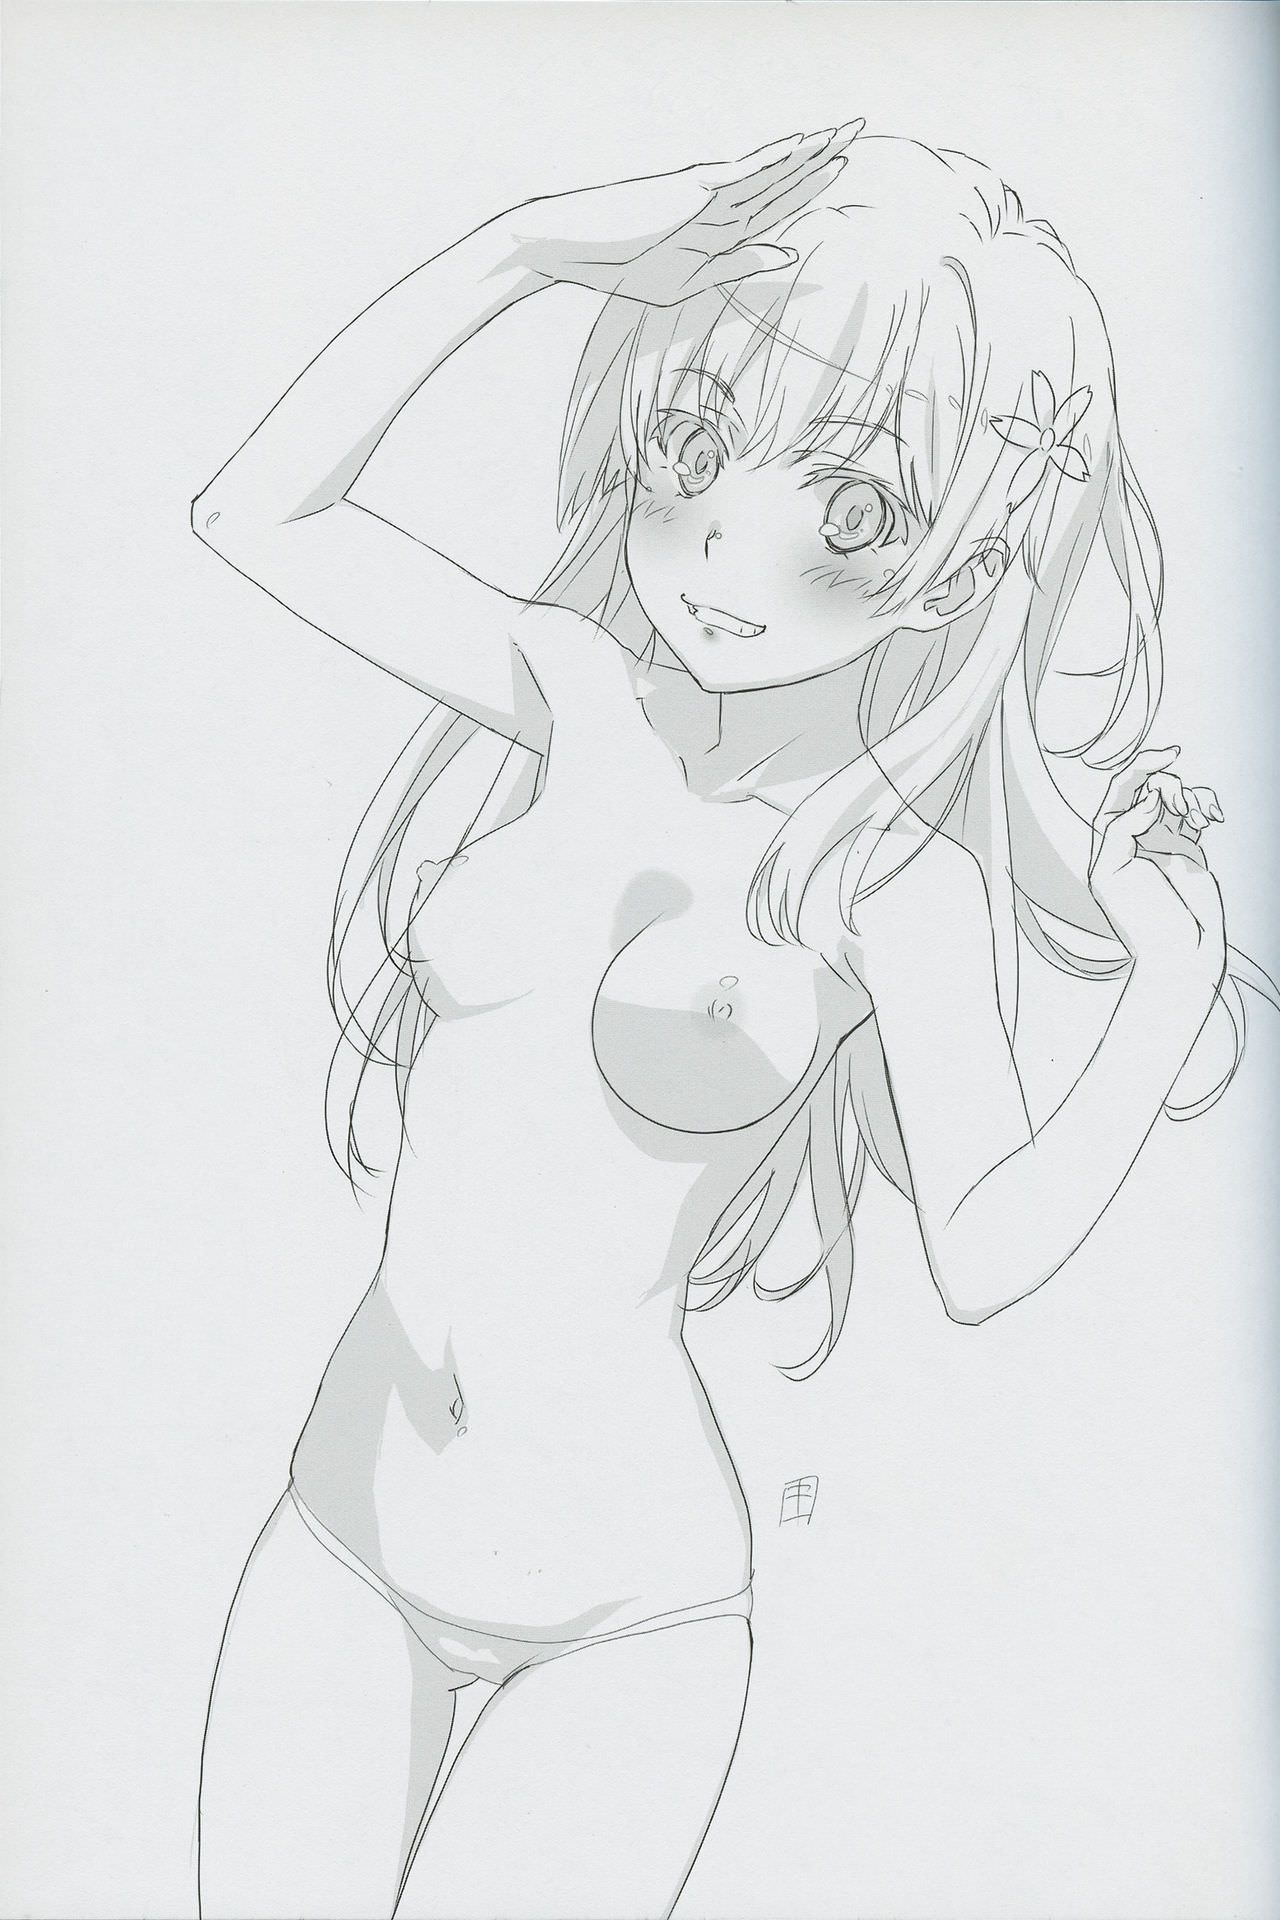 [Image] Saten's nipples drawn by an animator 3